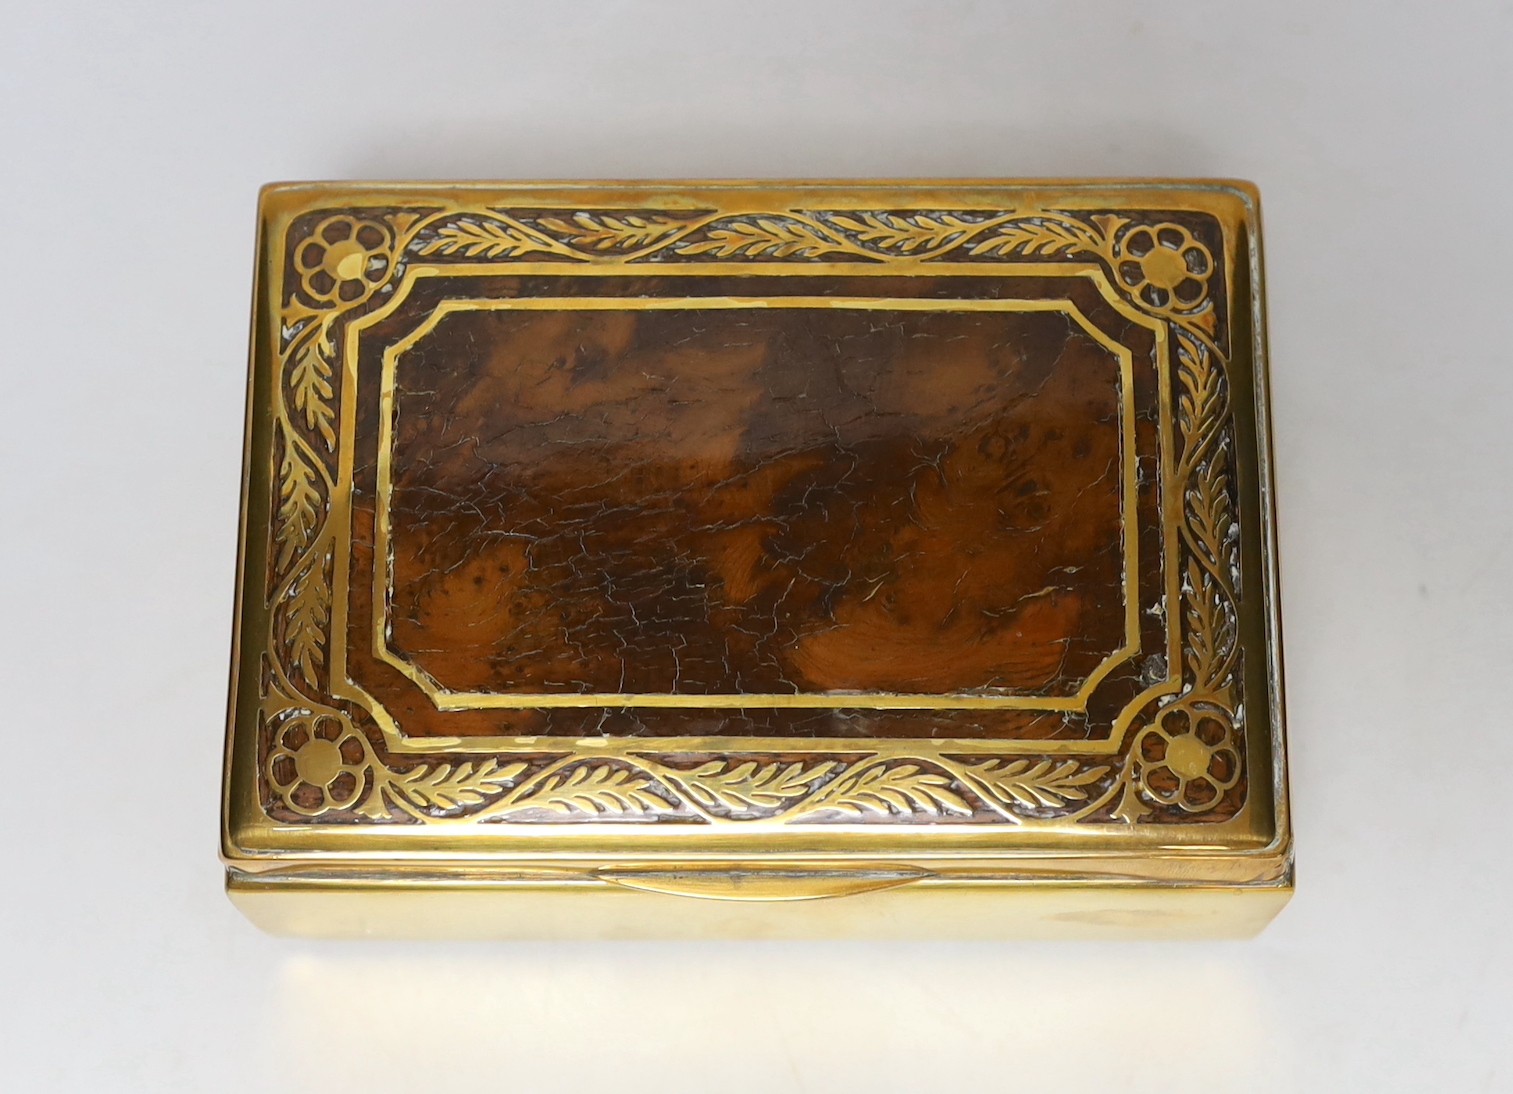 A burr oak topped brasswork cigarette box, 14ms wide x10cms deep